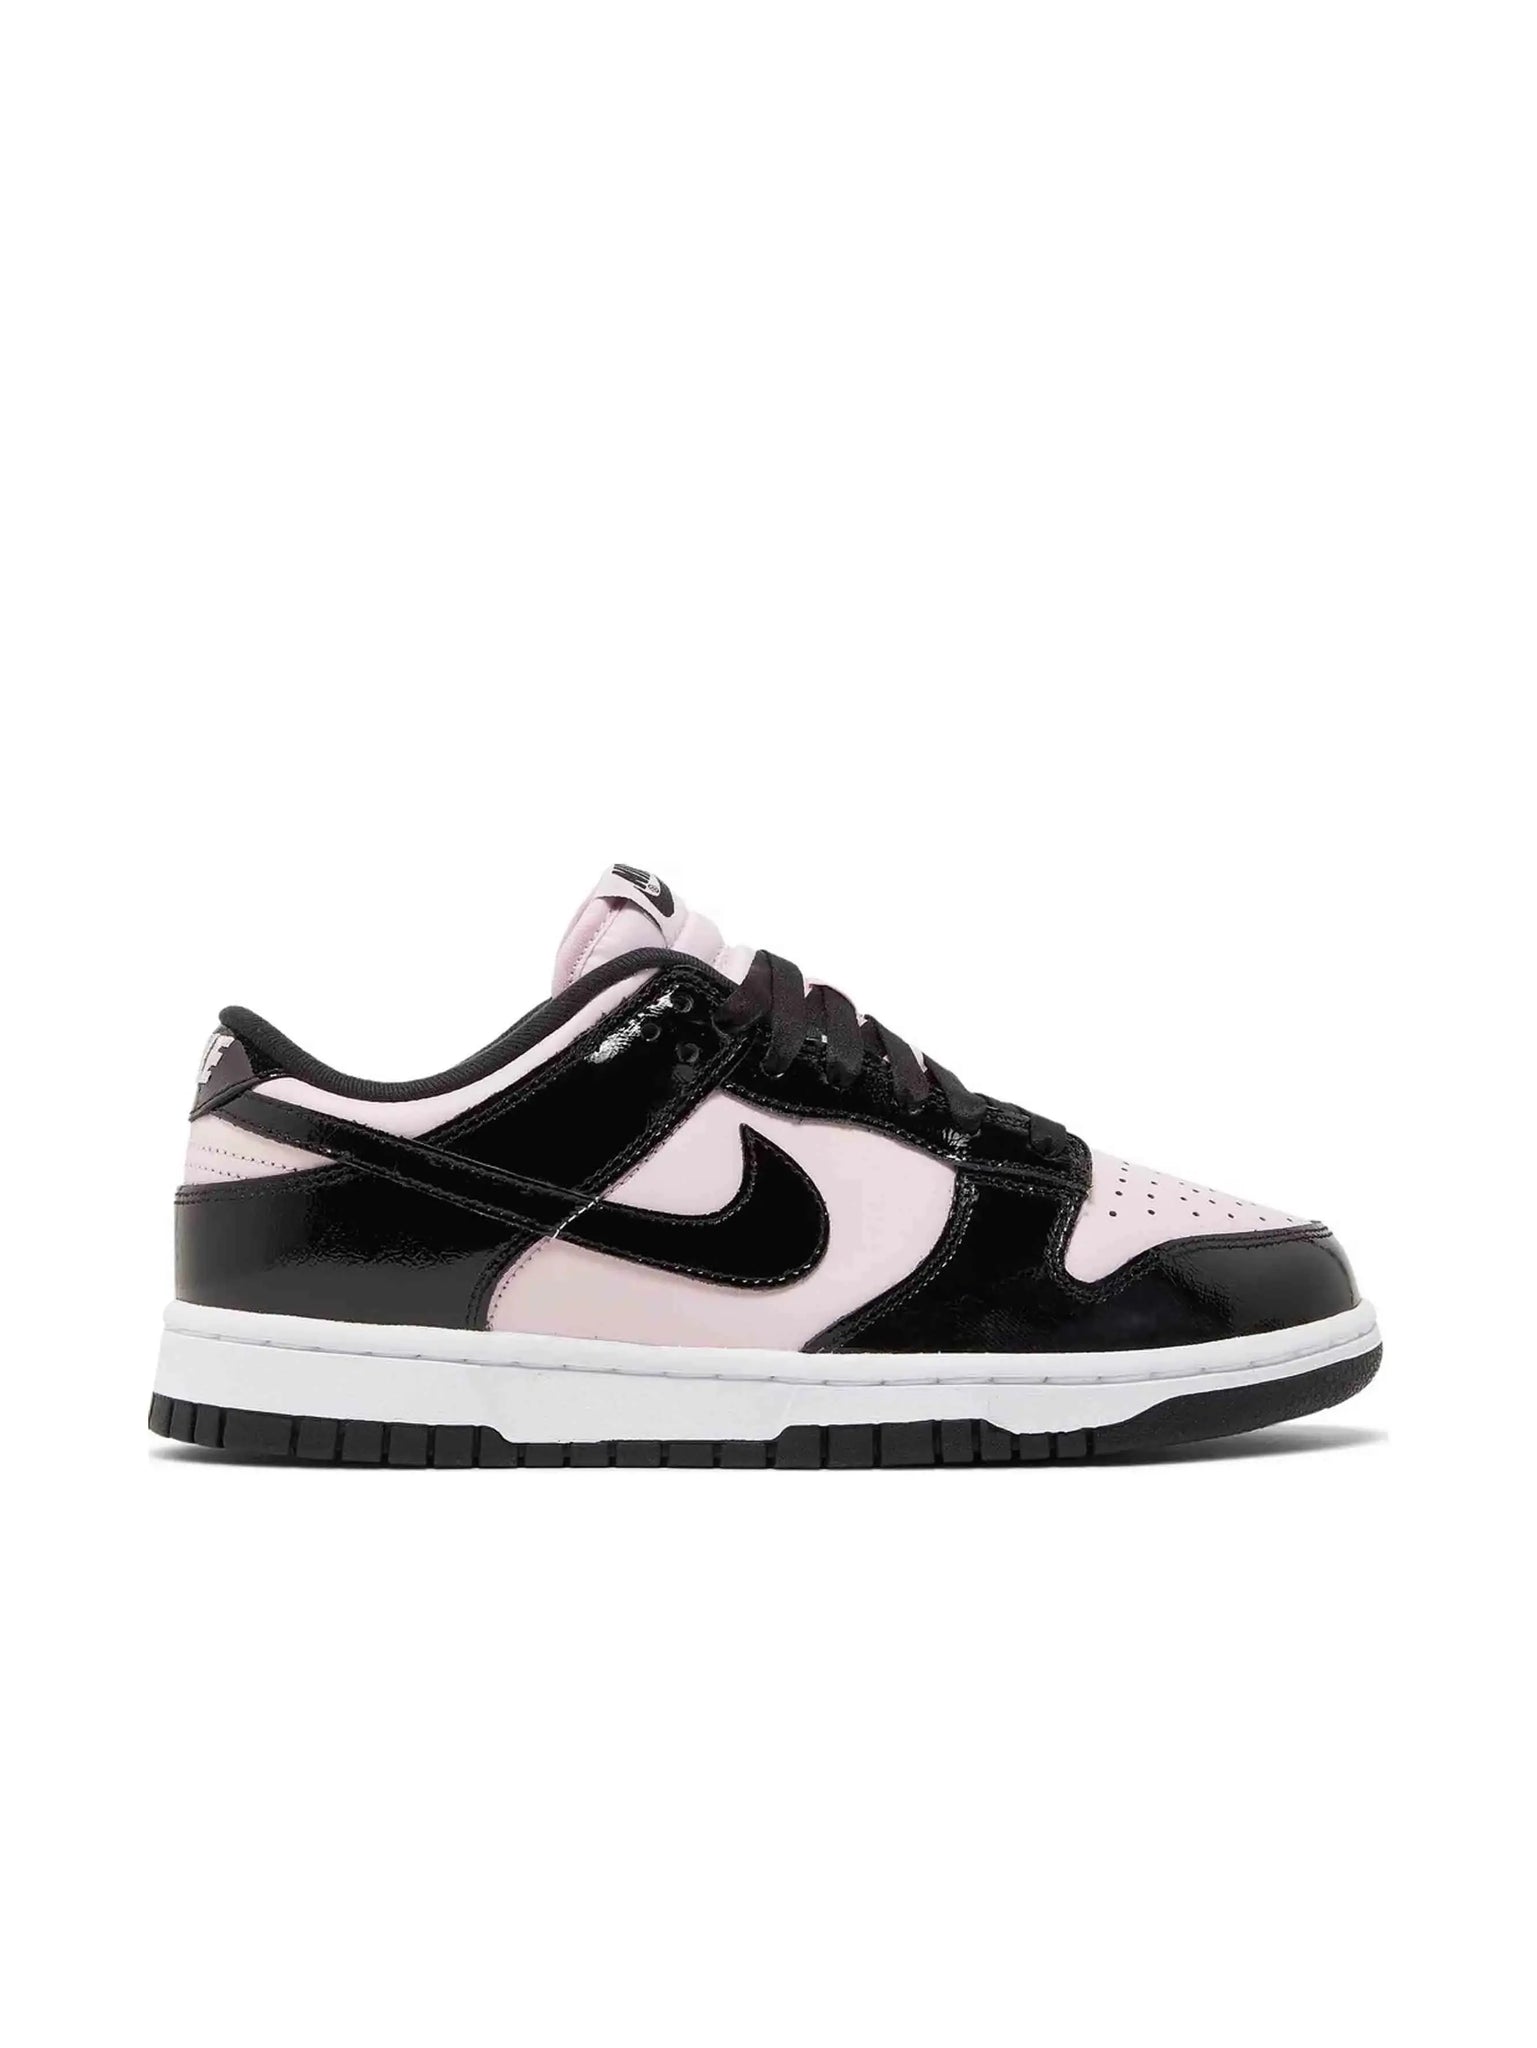 Nike Dunk Low Pink Foam Black (W) (REPLACEMENT BOX)